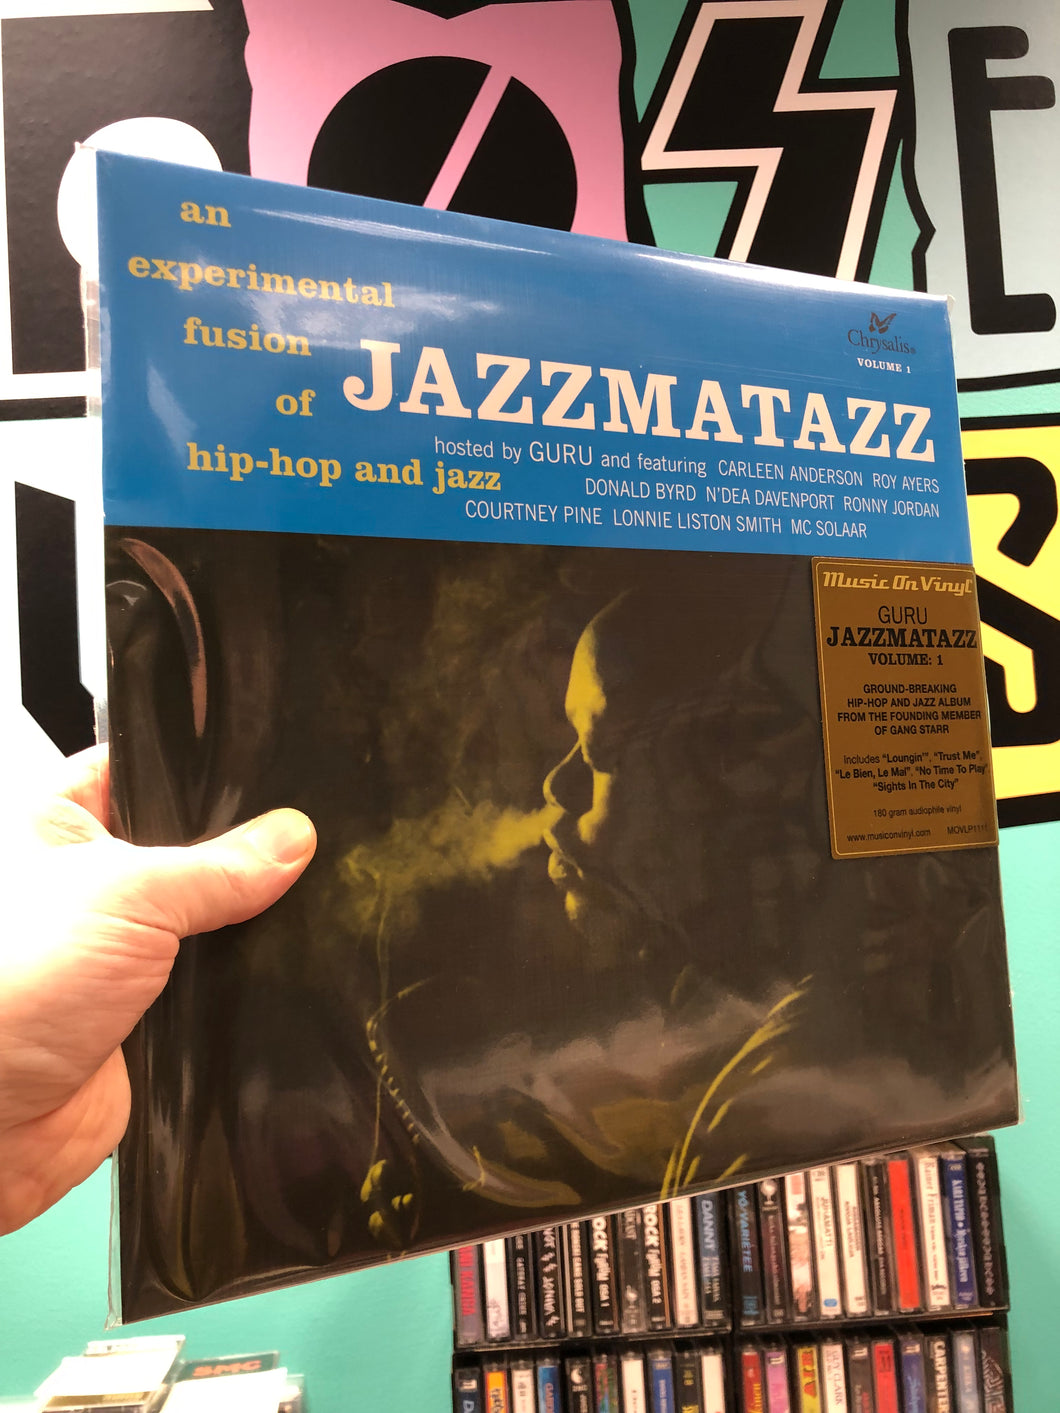 Guru: Jazzmatazz (Volume 1), reissue, Europe 2022